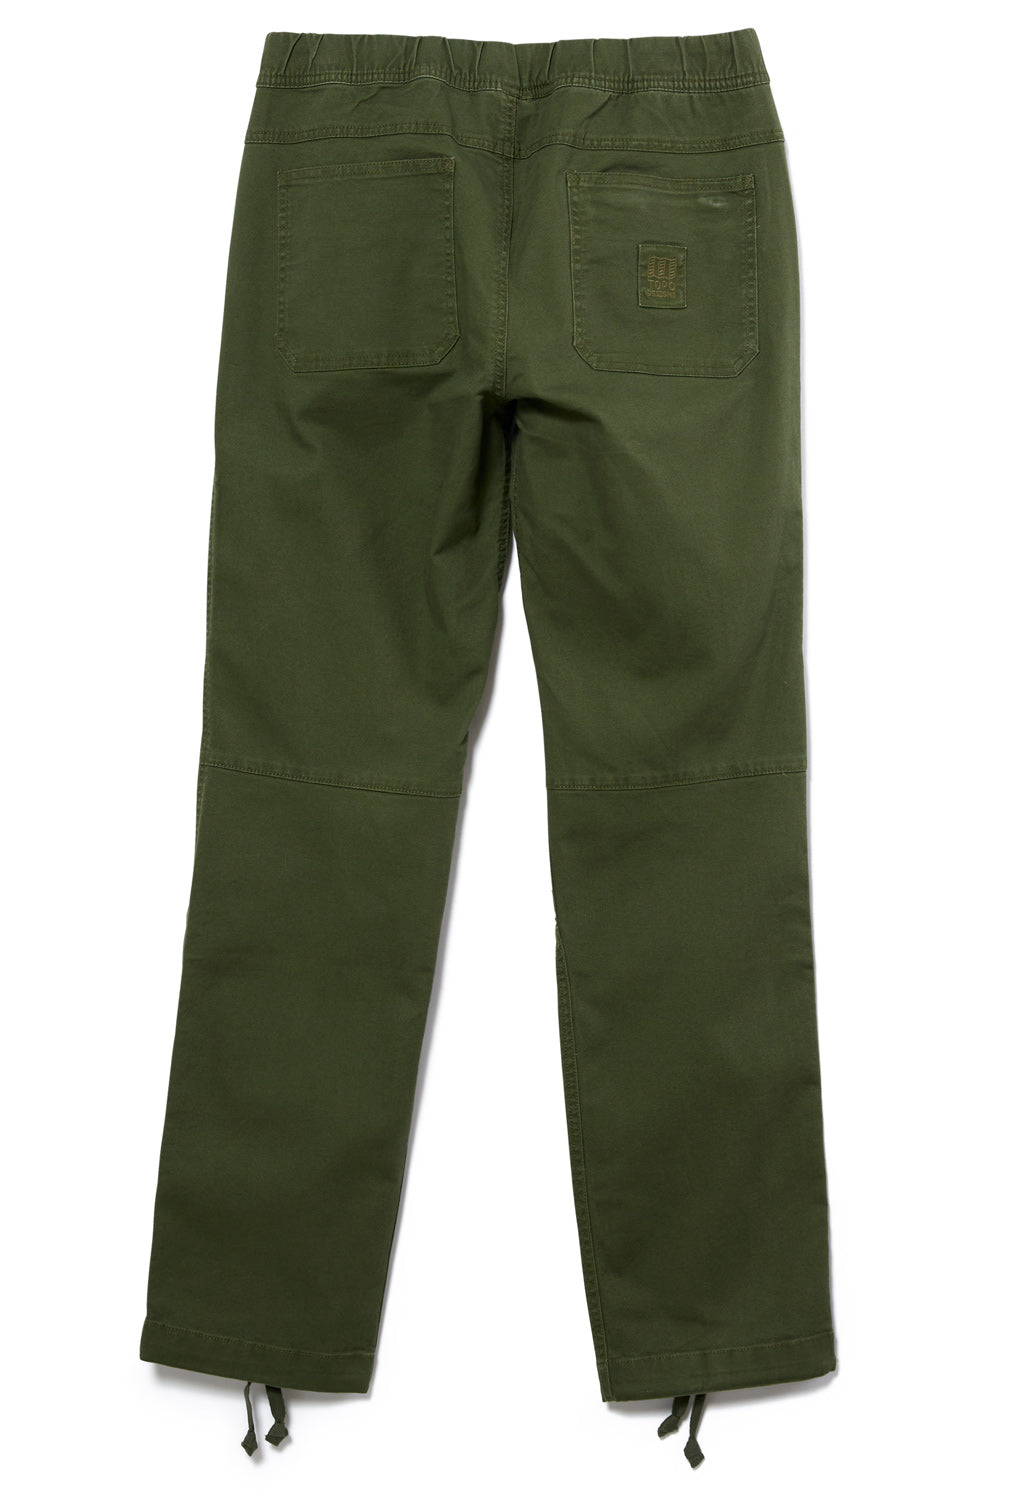 Topo Designs Men's Dirt Pants - Olive